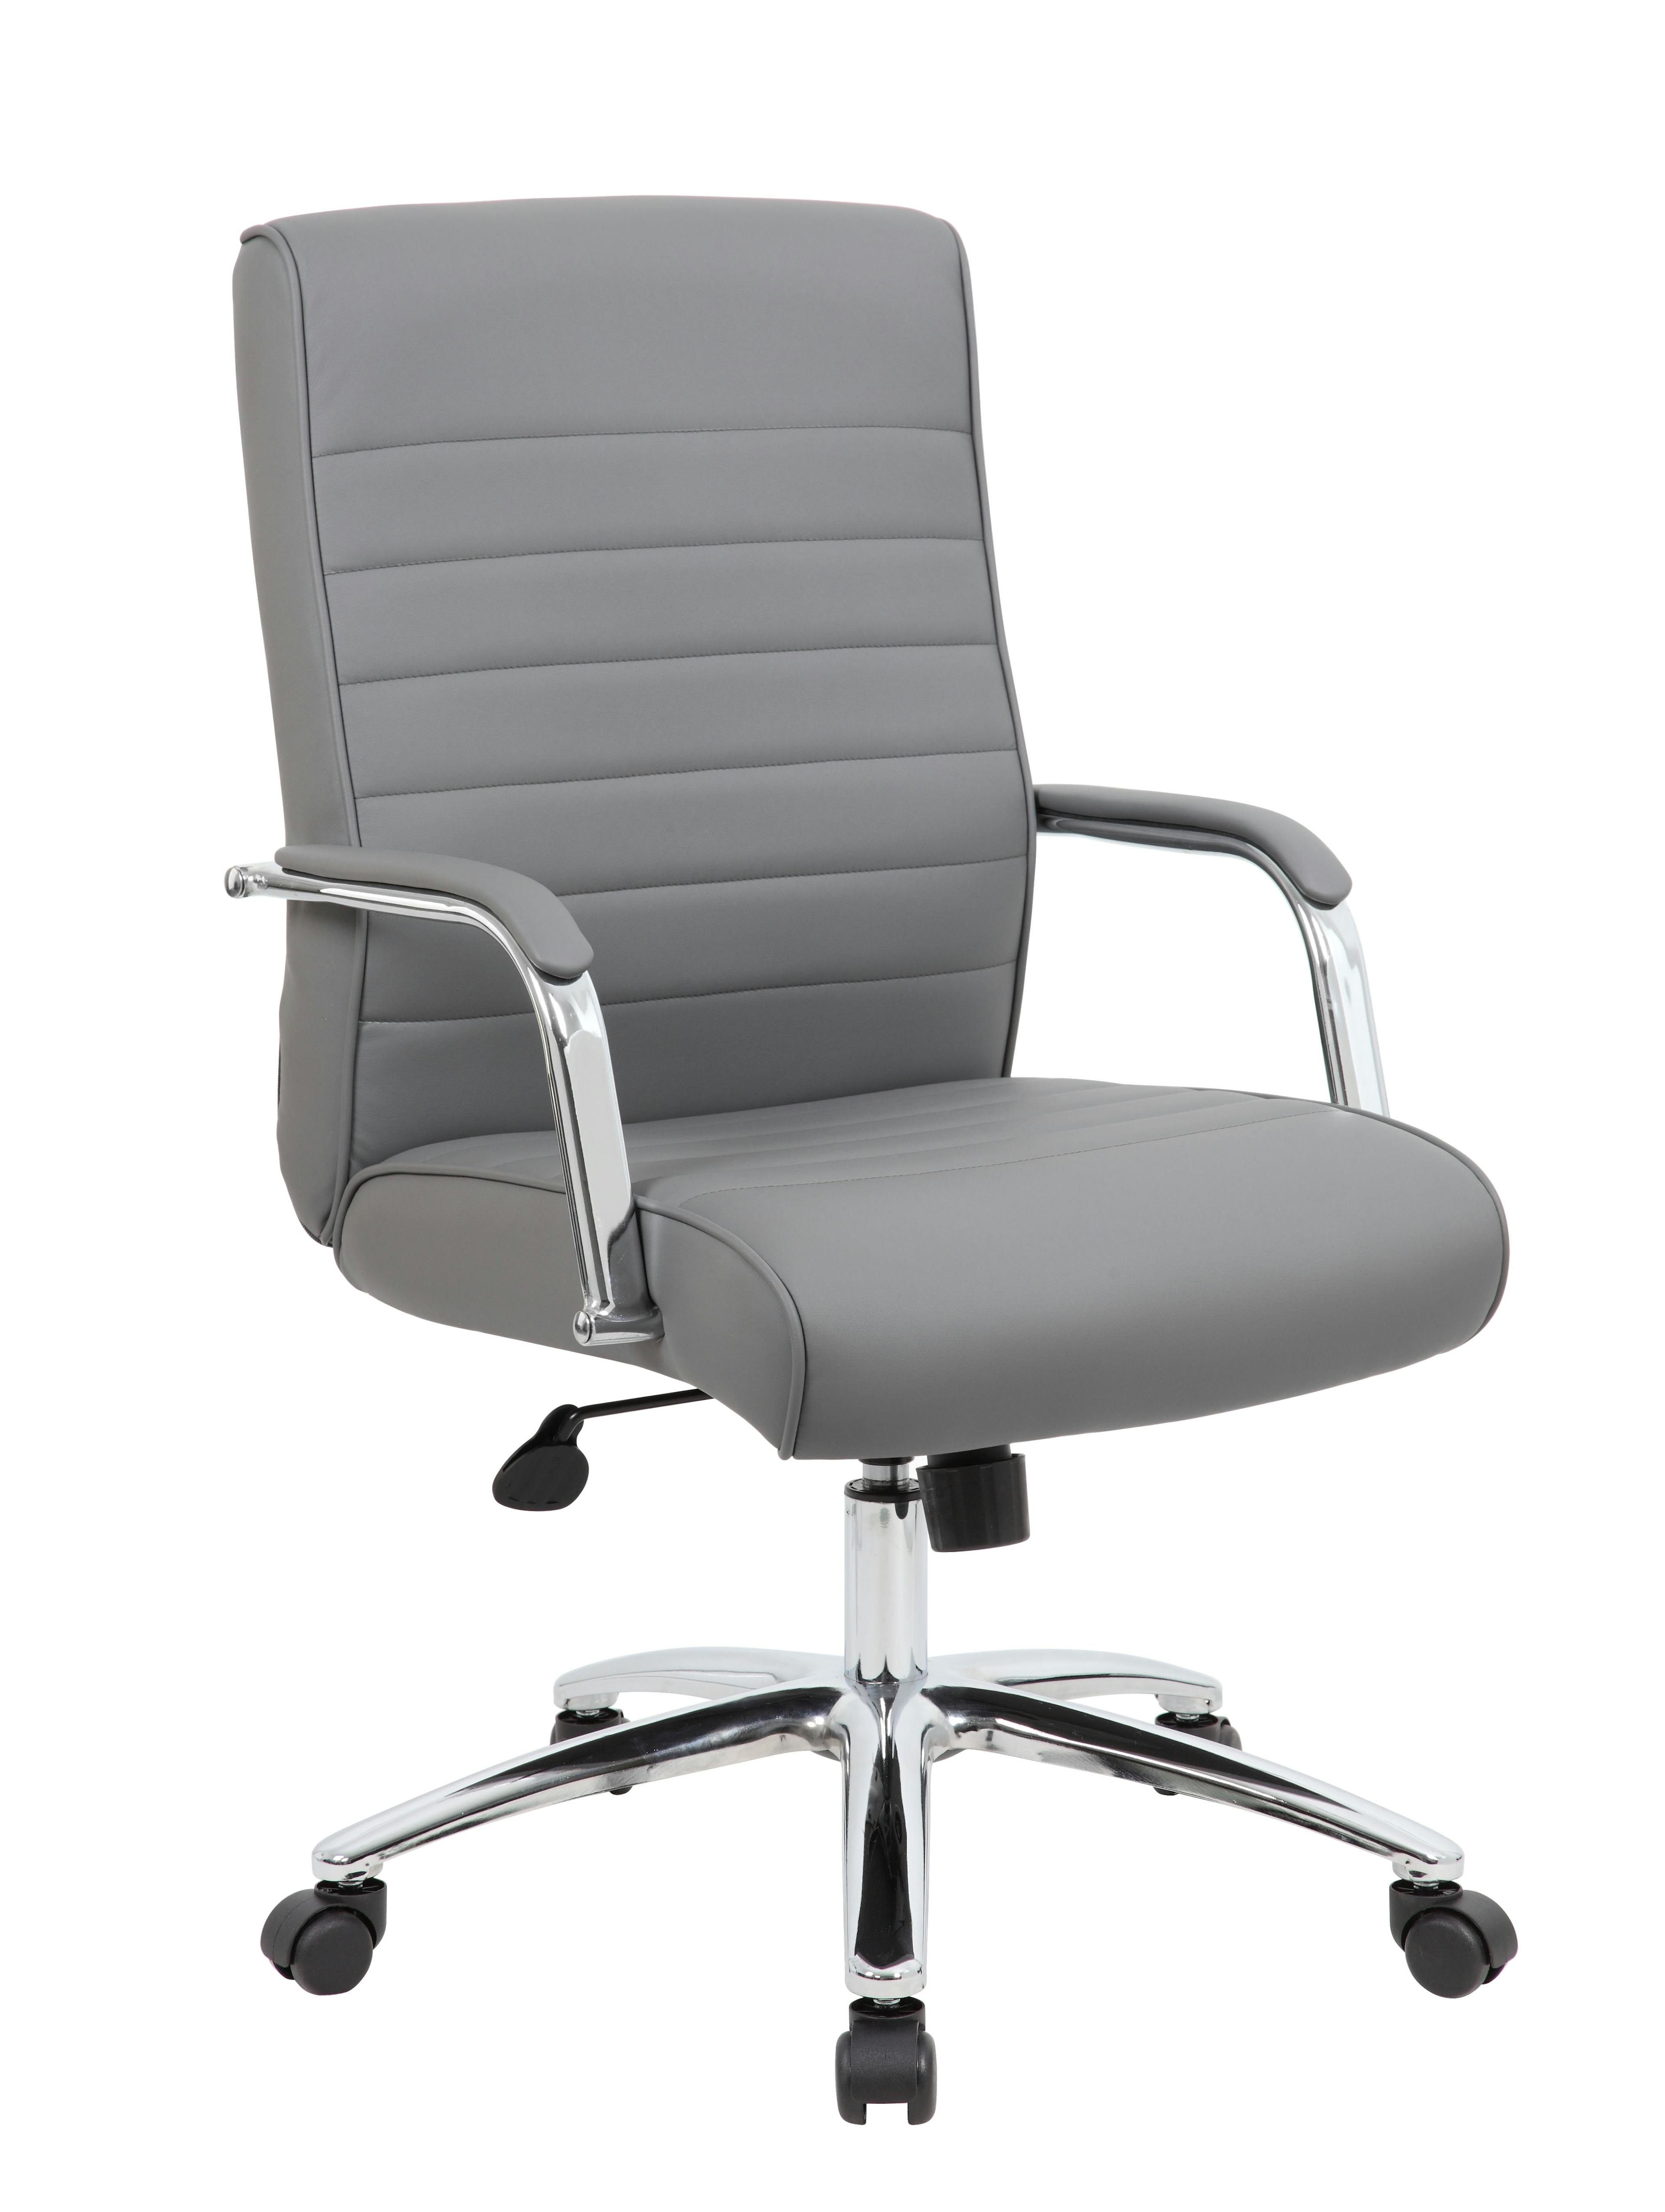 Modern Executive Ergonomic Swivel Chair in Ribbed Gray Vinyl